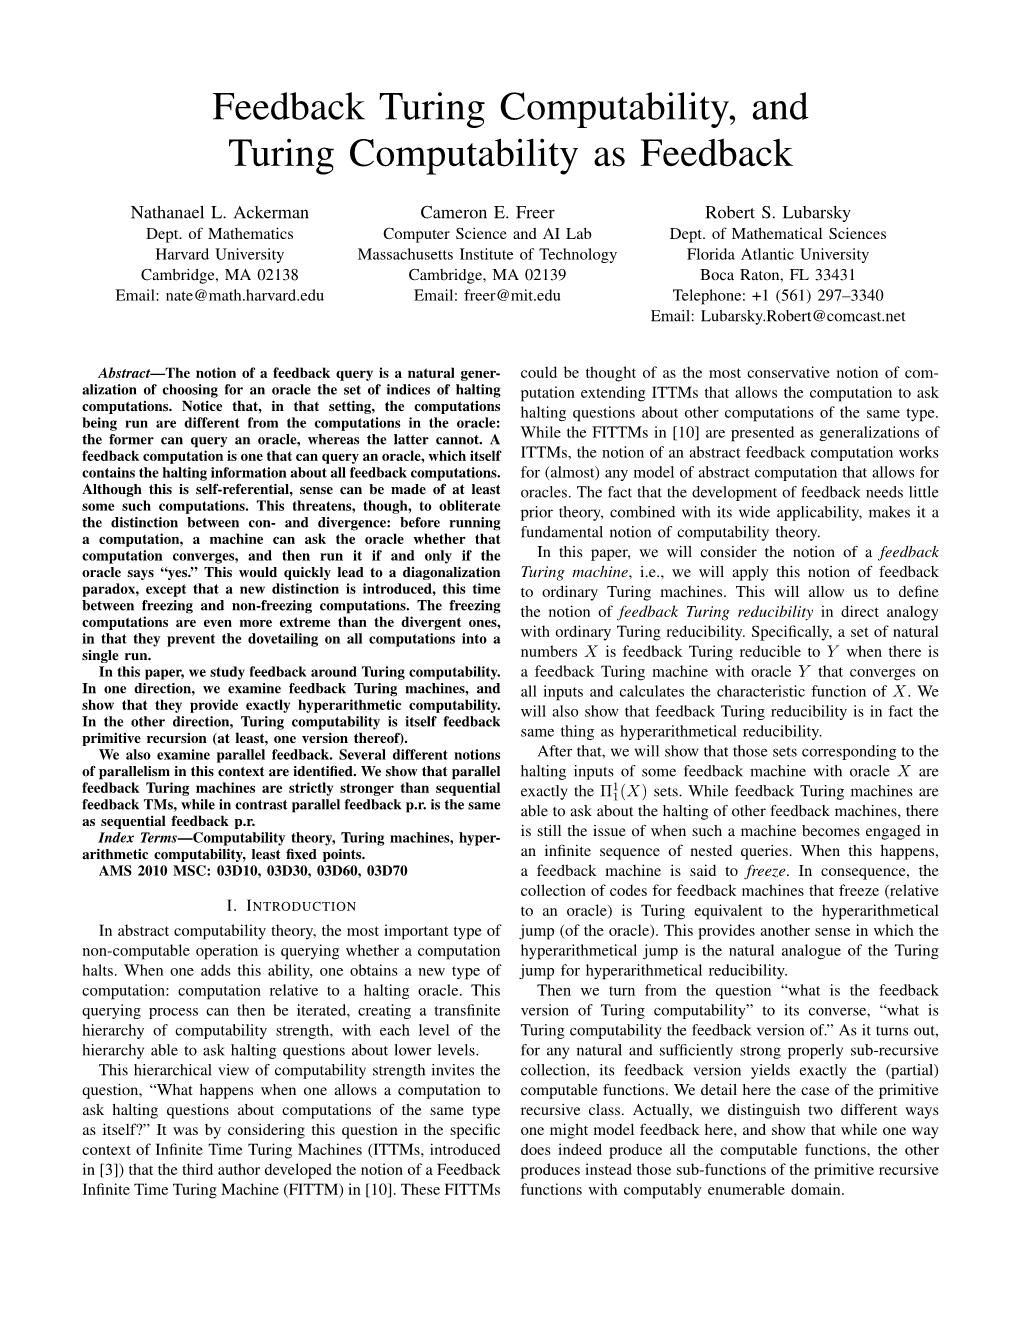 Feedback Turing Computability, and Turing Computability As Feedback